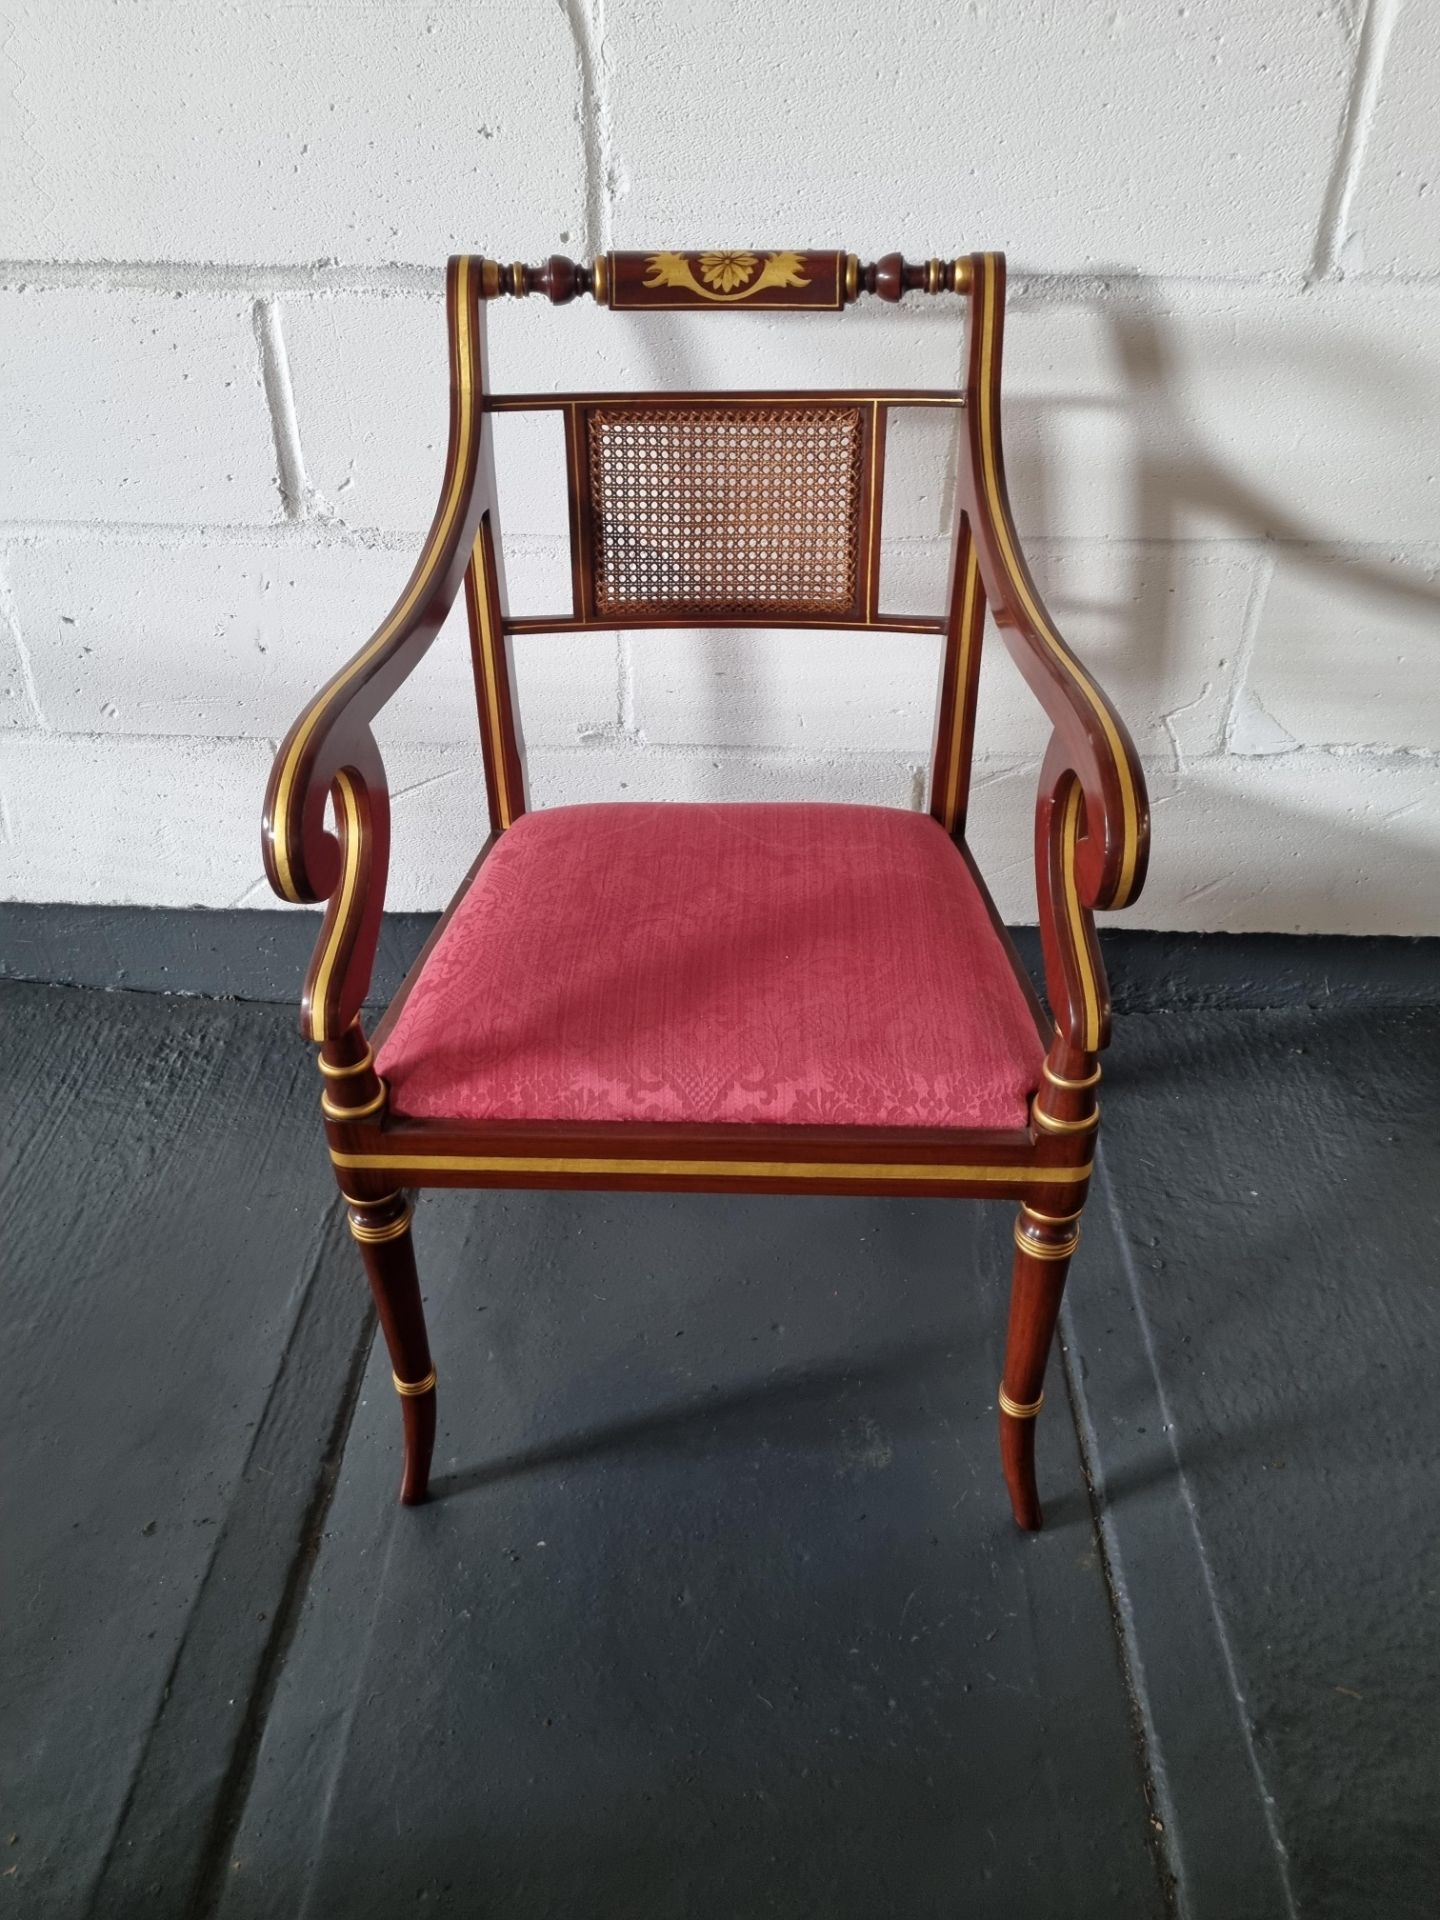 Arthur Brett Arm Chair Regency-Style Chair Bespoke Red Unupholstered In Rosewood Colour Finish